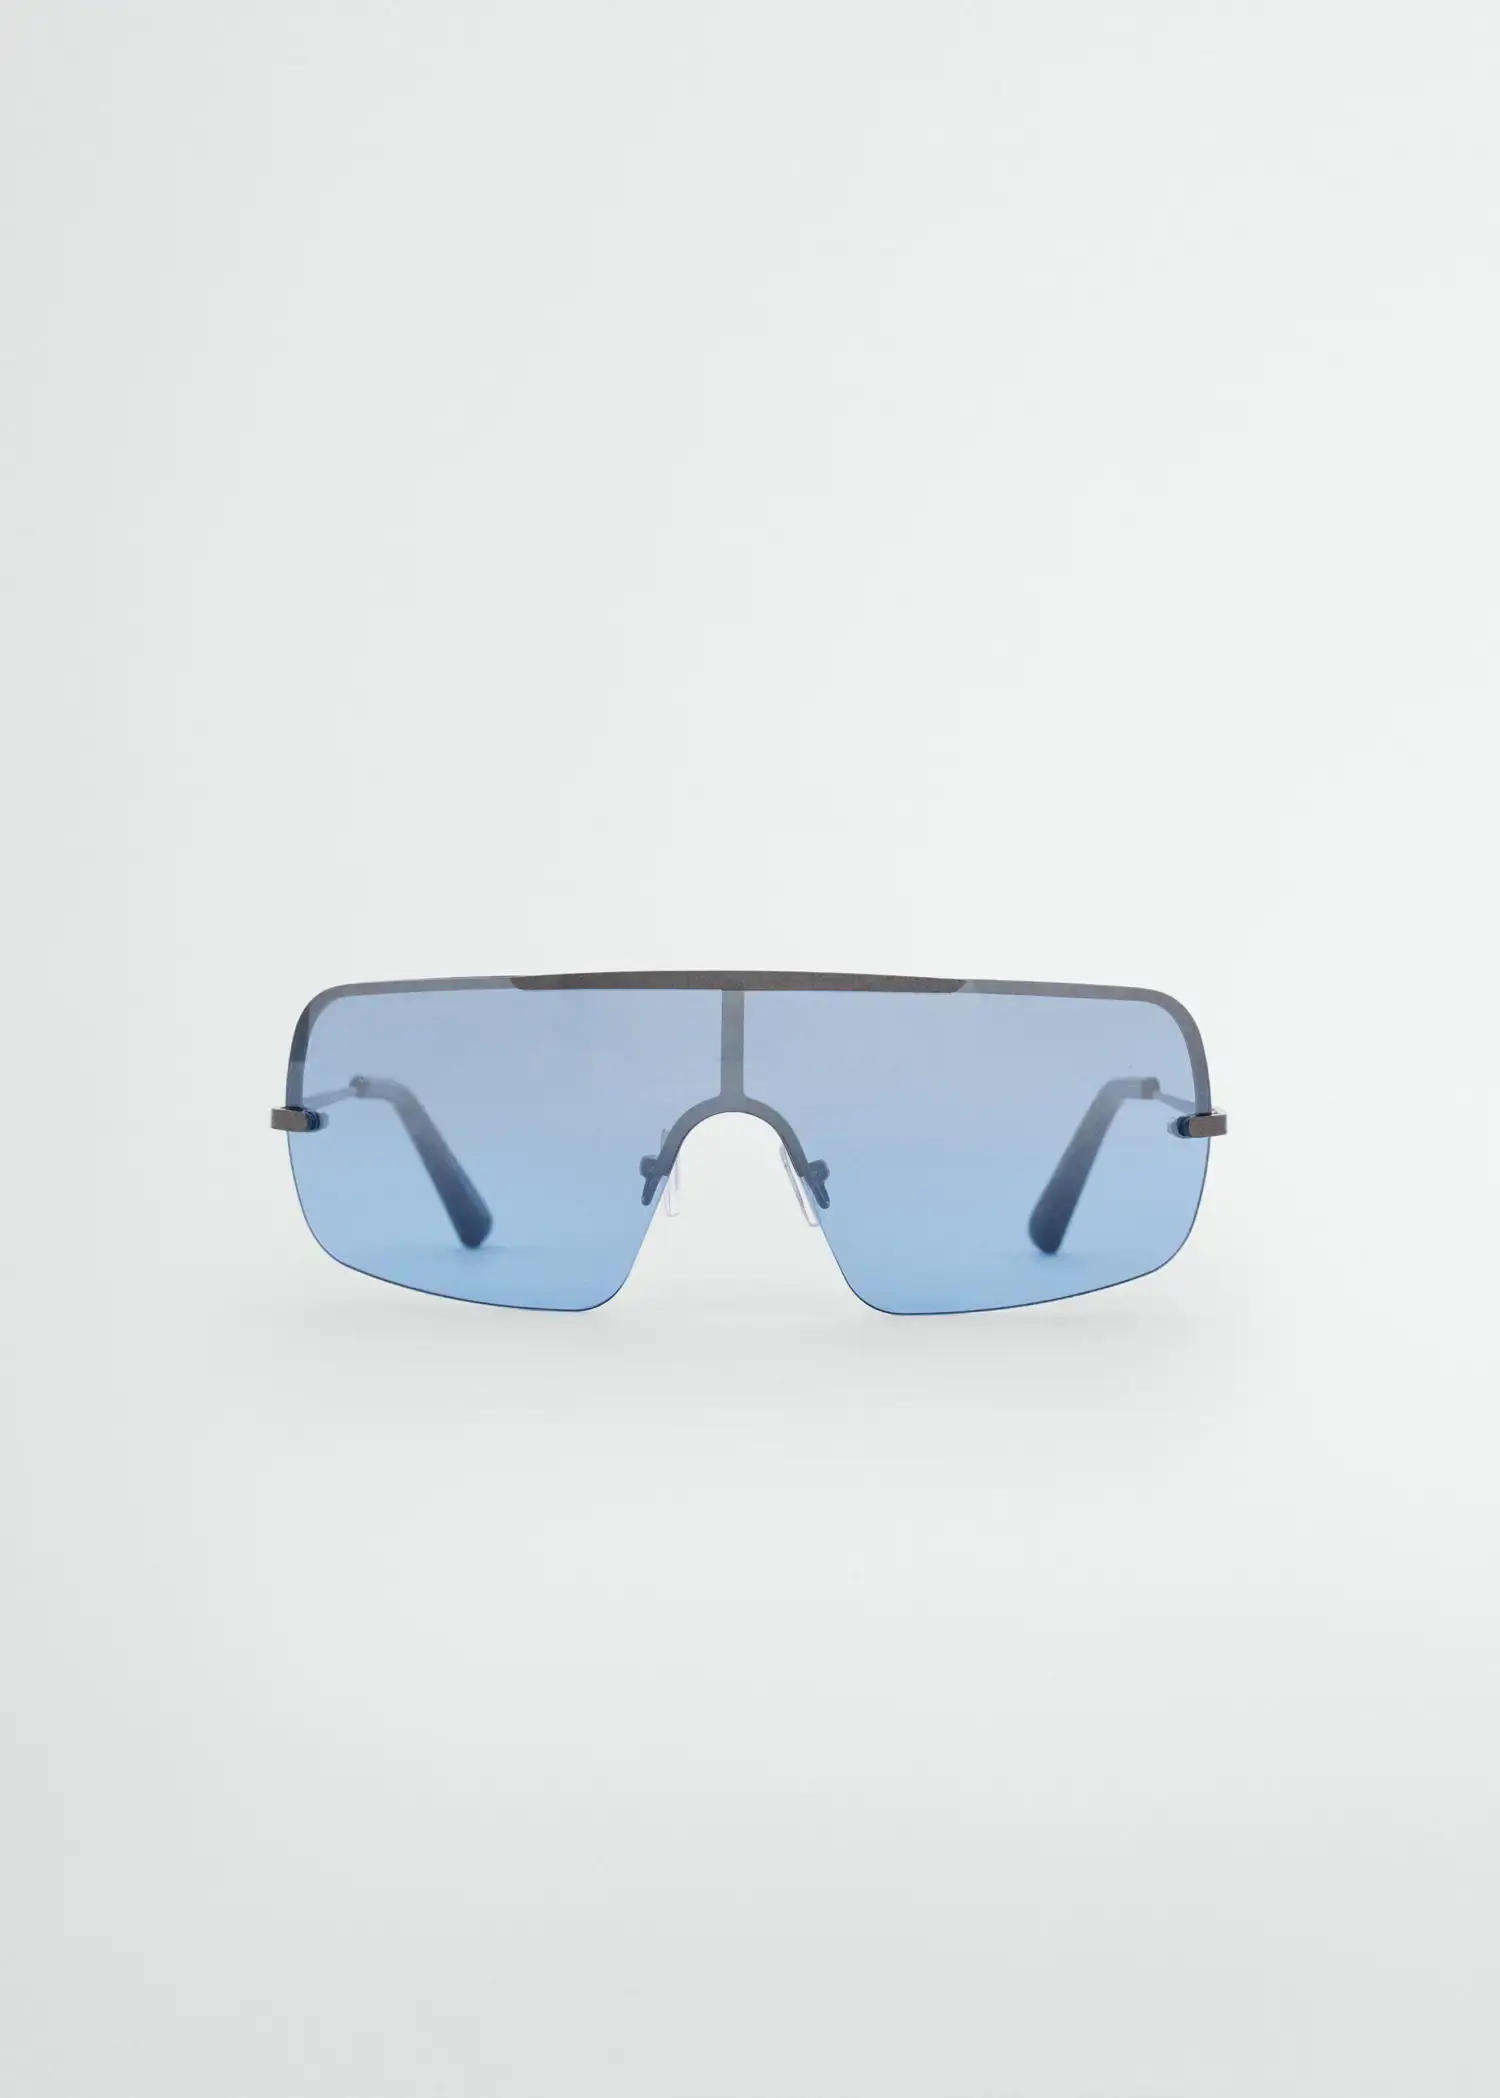 Mango Shade sunglasses. 2